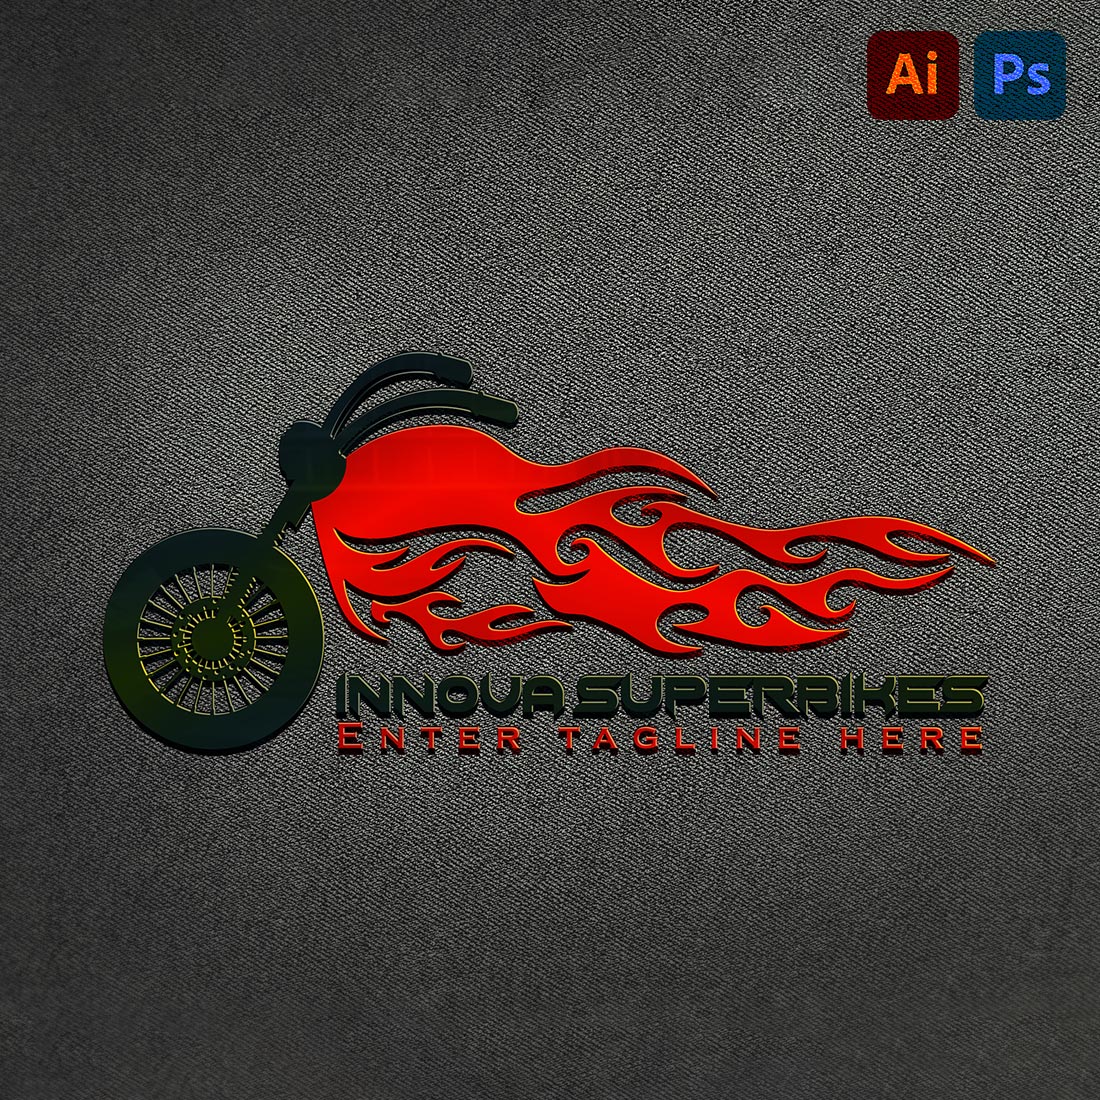 Motorbike logo preview image.